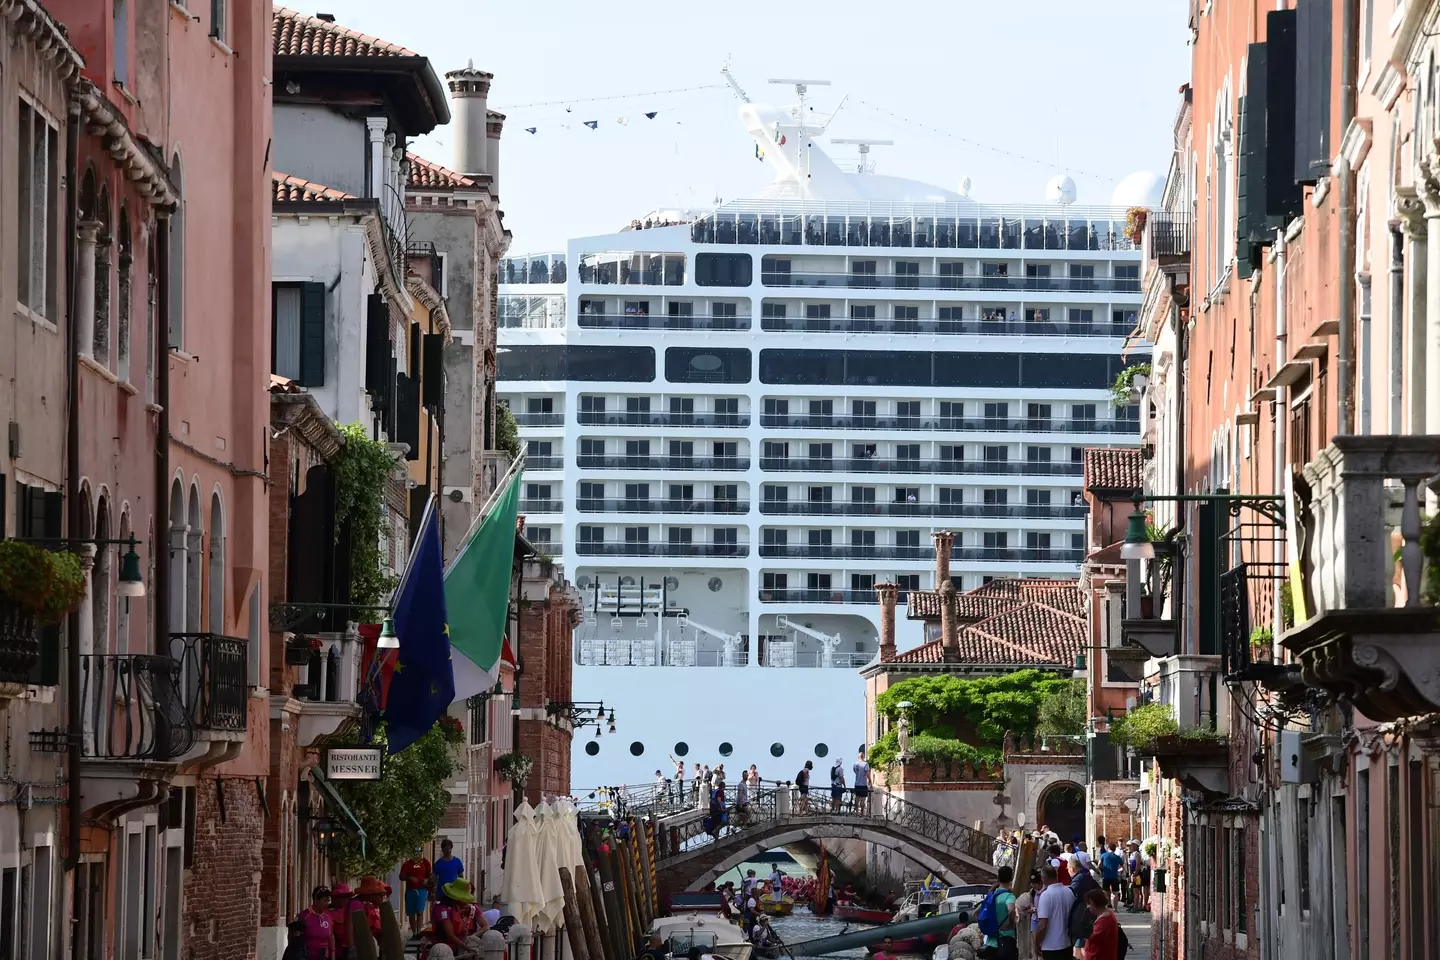 A cruise ship seen from a Venice street.